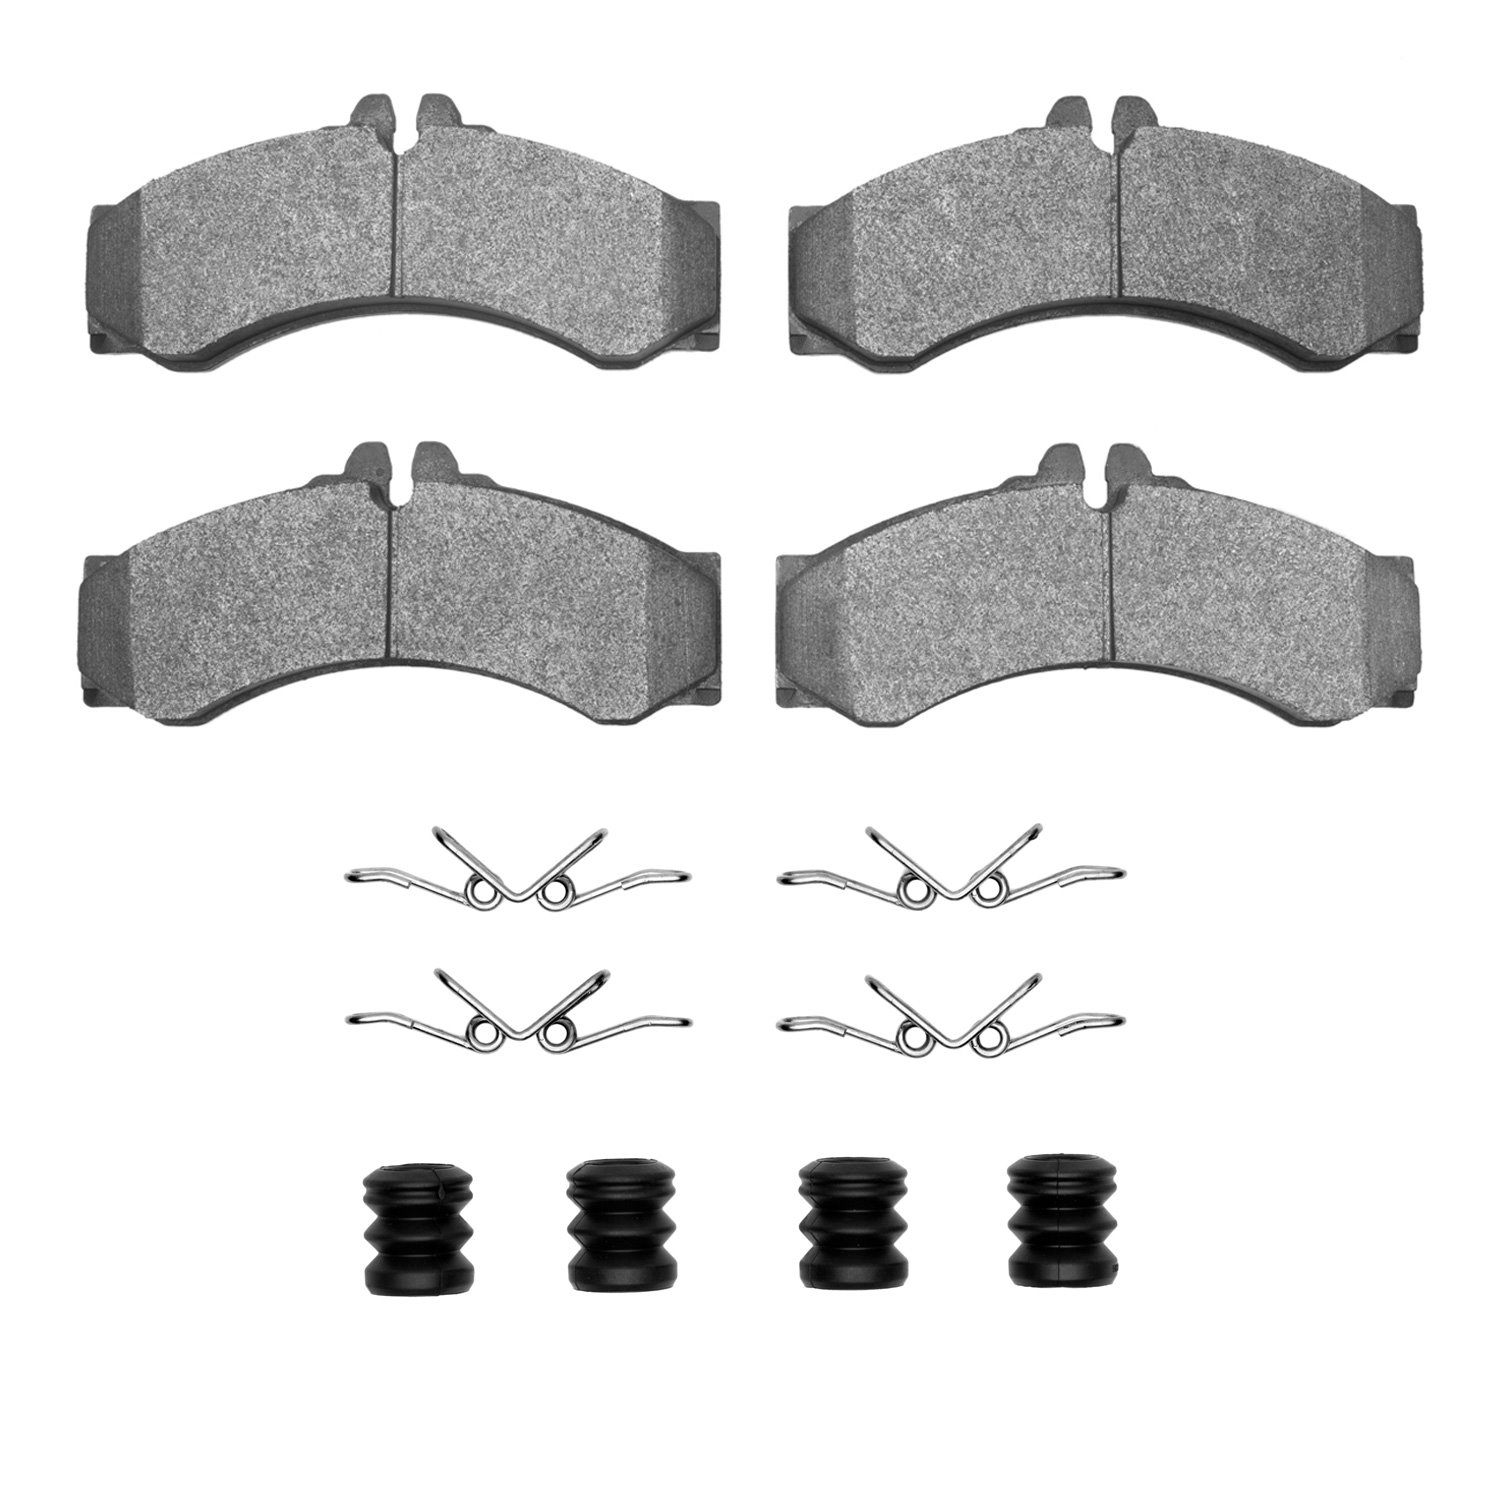 1551-0949-02 5000 Advanced Semi-Metallic Brake Pads & Hardware Kit, 2002-2006 Multiple Makes/Models, Position: Front,Fr,Rear,Rr